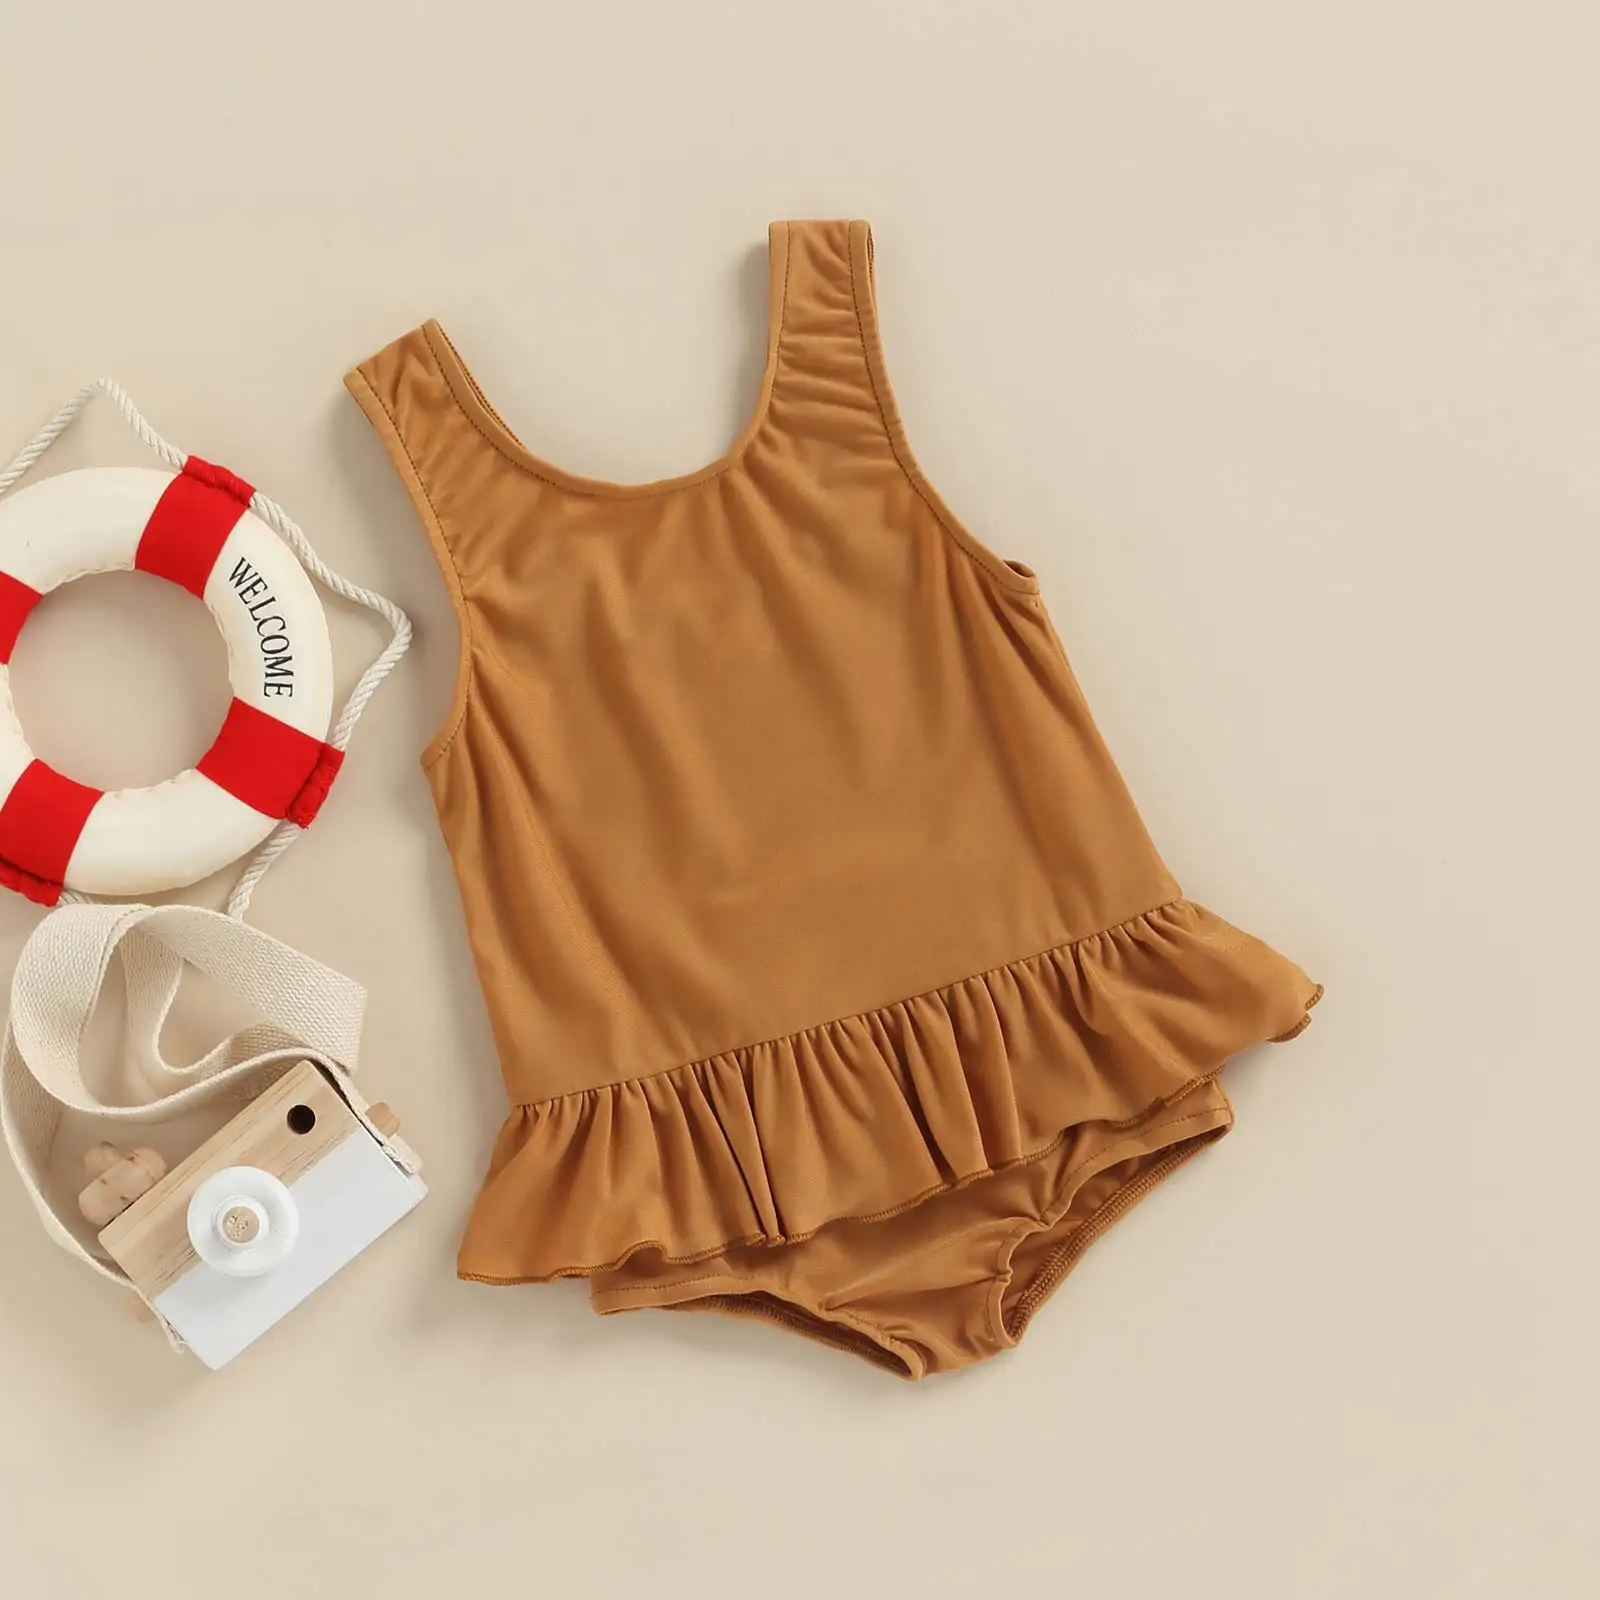 2022 0-3Y Kids Infant Girl Swimdress Solid/Sun/Striped/Cherry/Lemon Print Sleeveless Swimsuit Summer Holiday Beach Bathing Suit Newborn Knitting Romper Hooded 